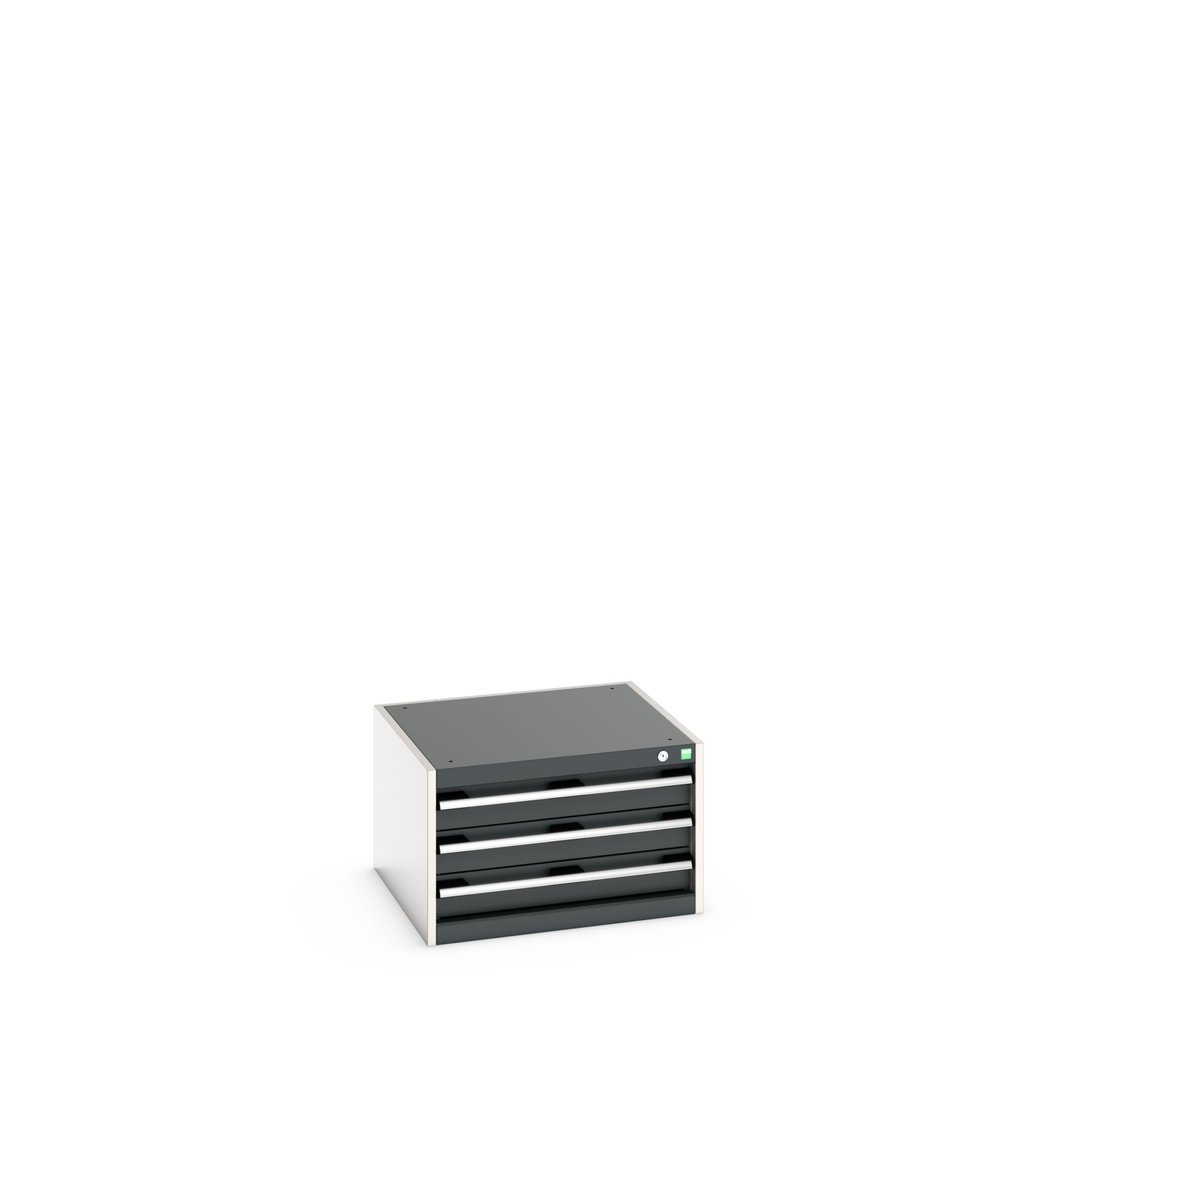 40019009. - cubio drawer cabinet